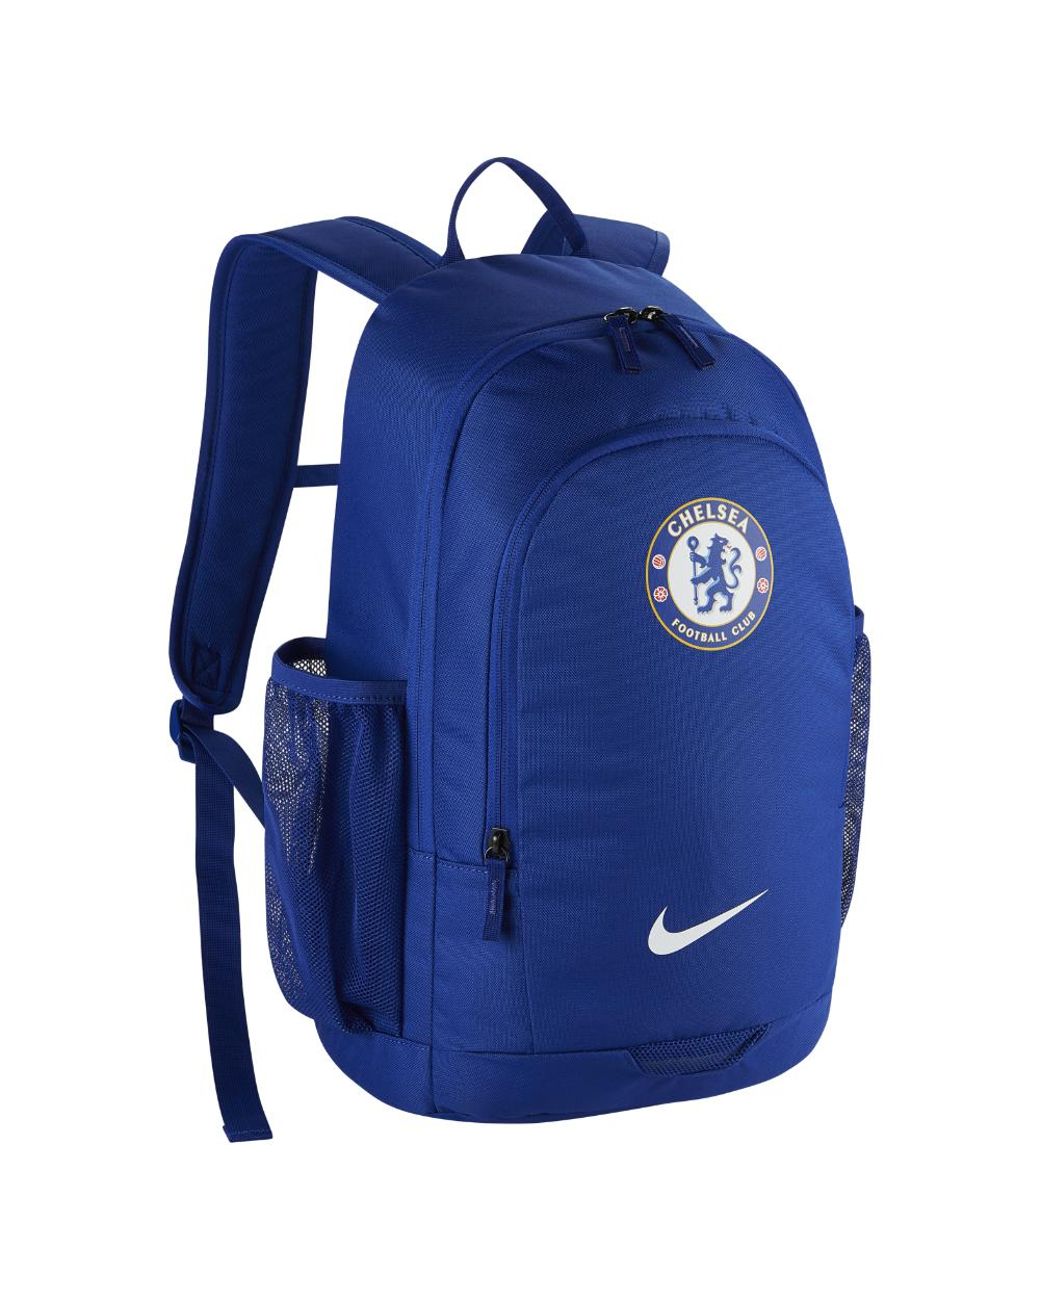 Chelsea Fc  Football Team Gym Sack/bag 